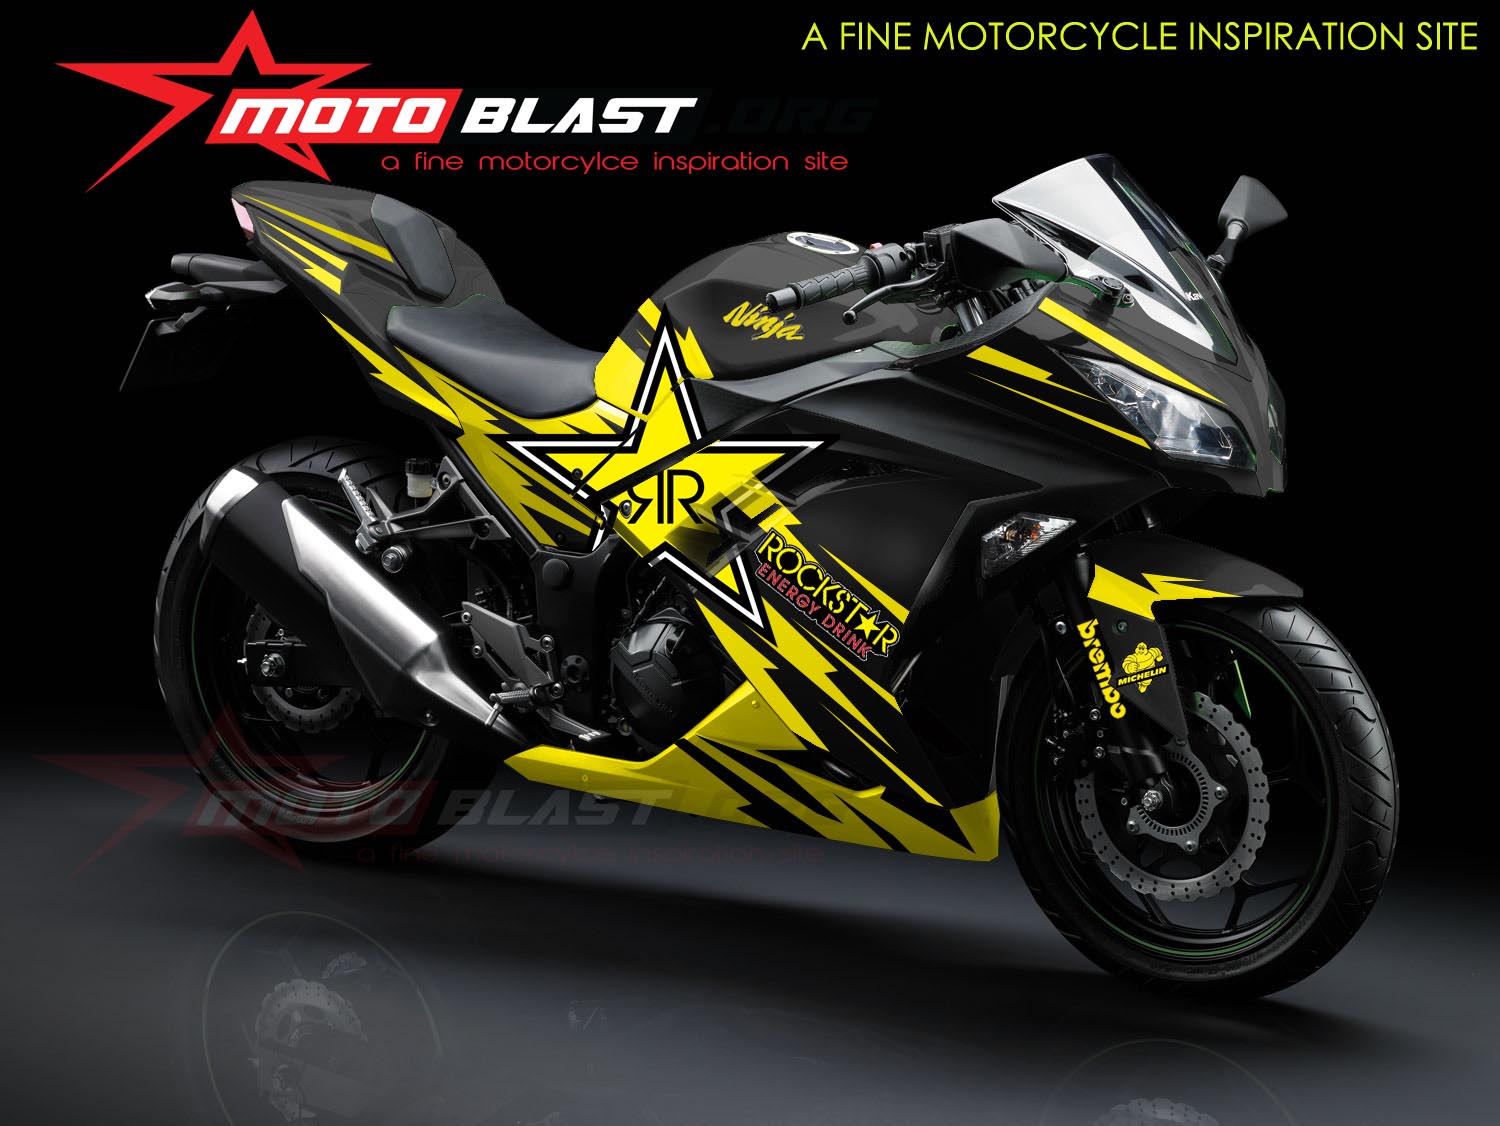 Motoblast Buka Pemesanan Decal Printing Untuk Kawasaki Ninja 250R